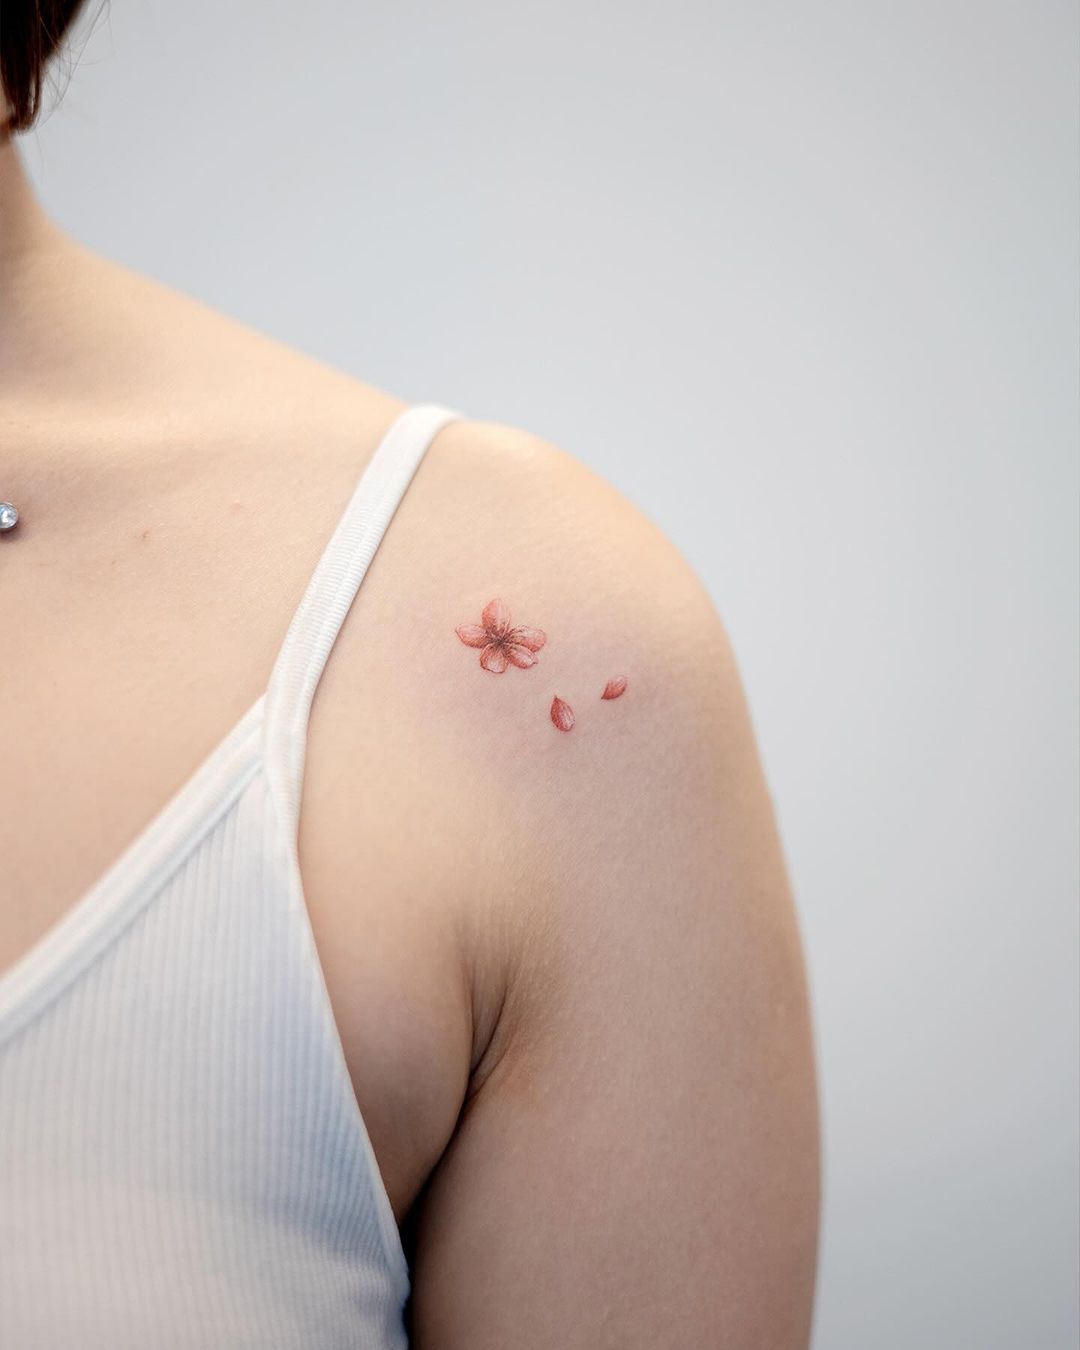 Minimalistic cherry blossom tattoo by handitrip